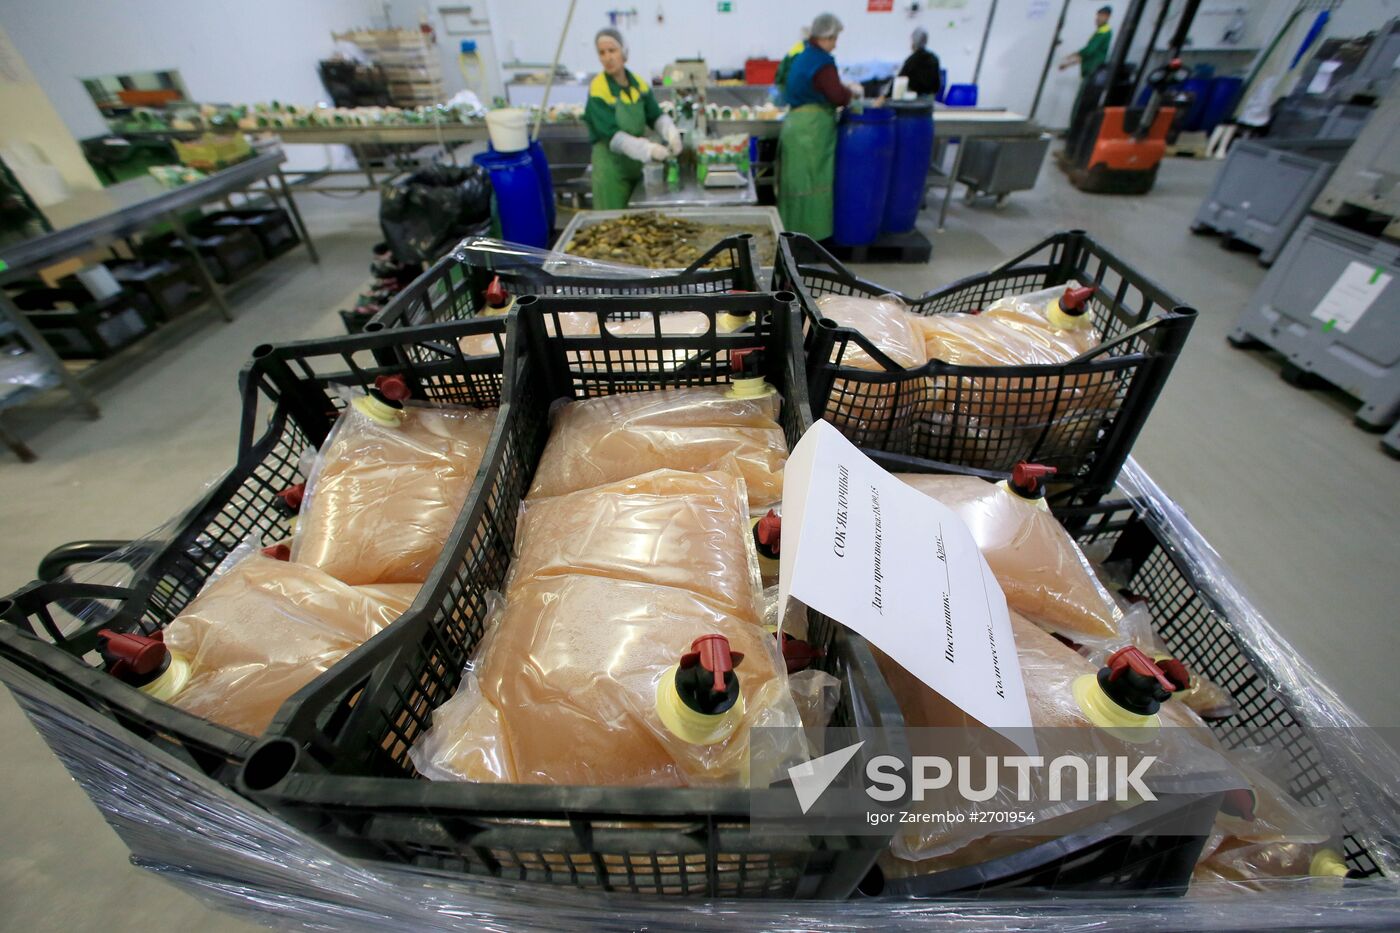 Apple juice production in Kaliningrad Region